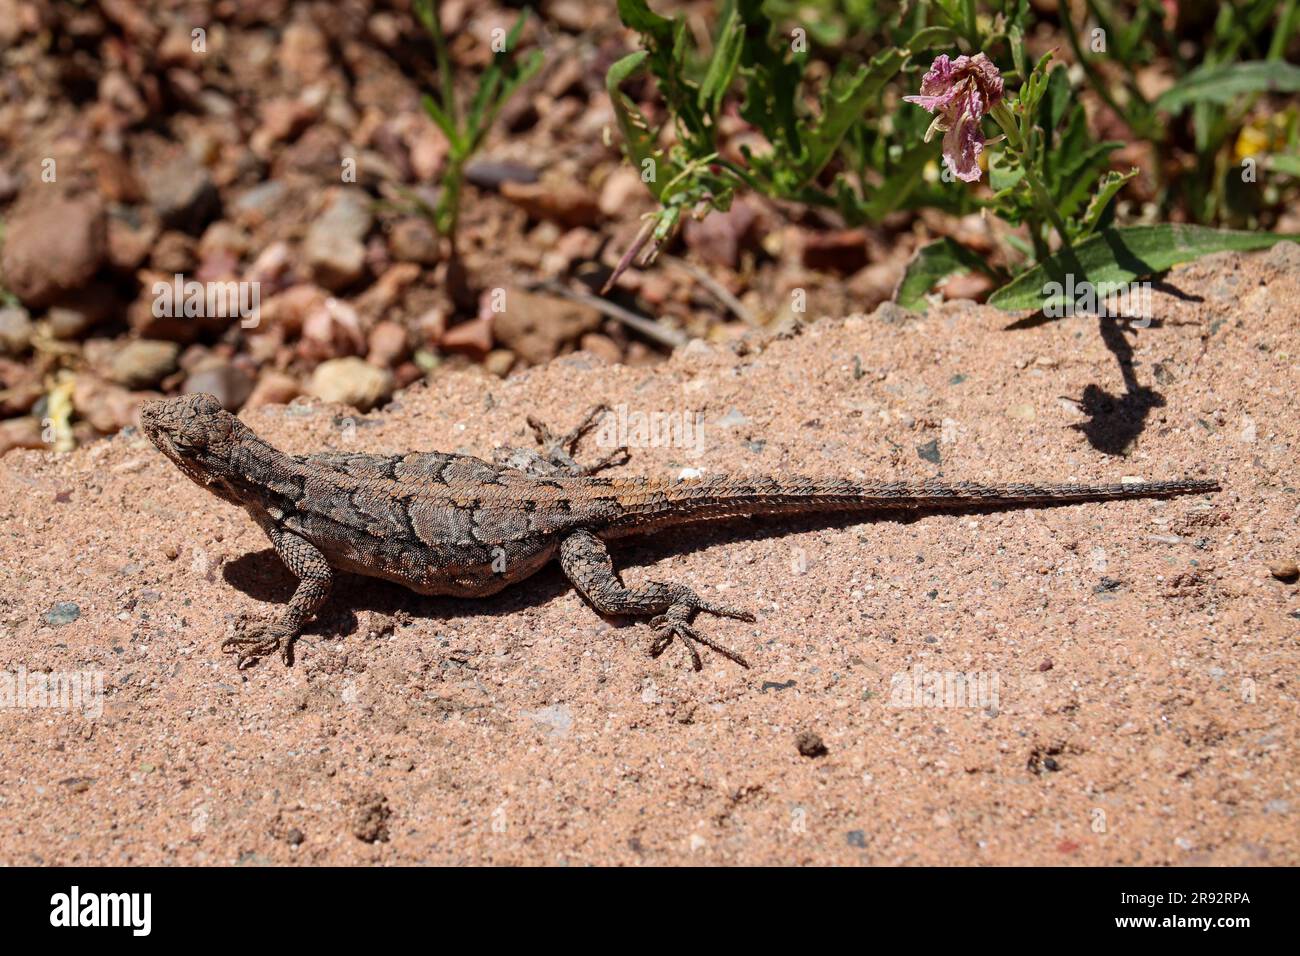 Female Ornate tree lizard or Urosaurus ornatus sunny on concrete at the Payson College Campus in Arizona. Stock Photo